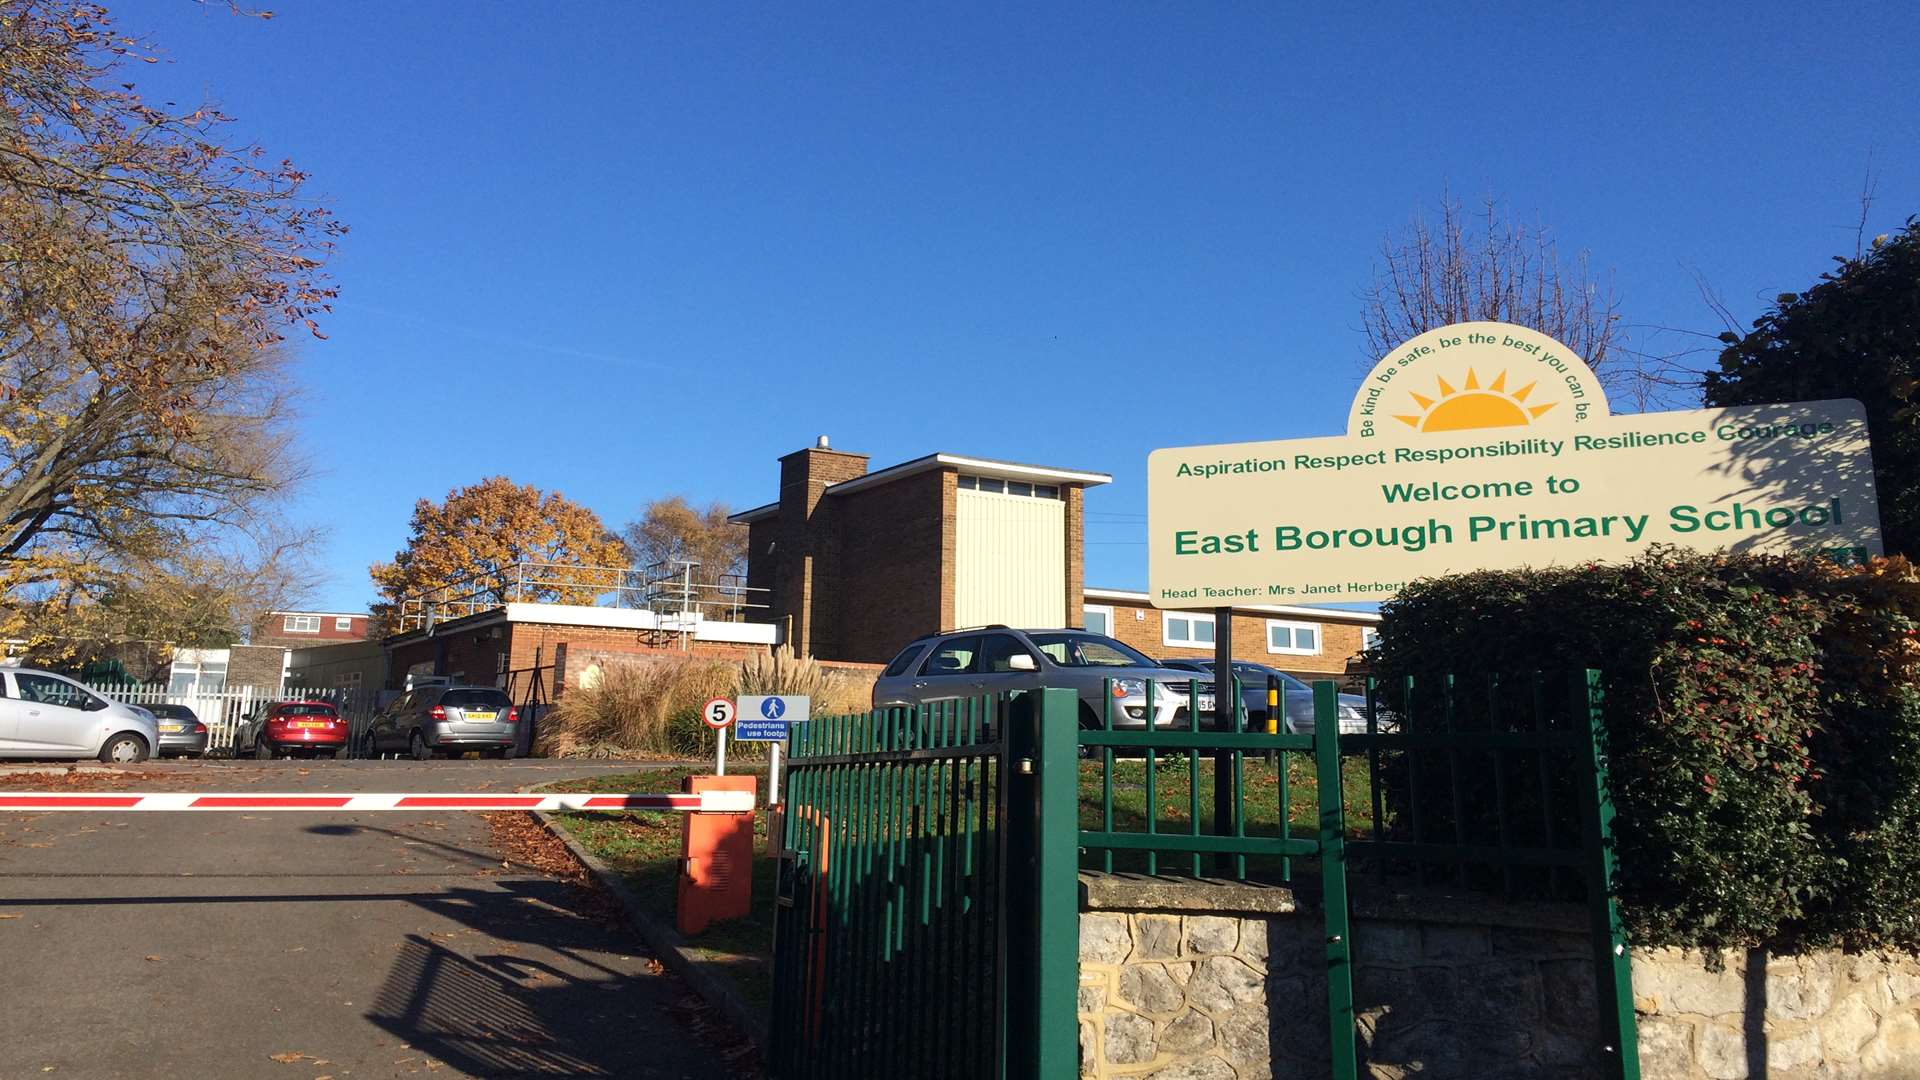 East Borough Primary School